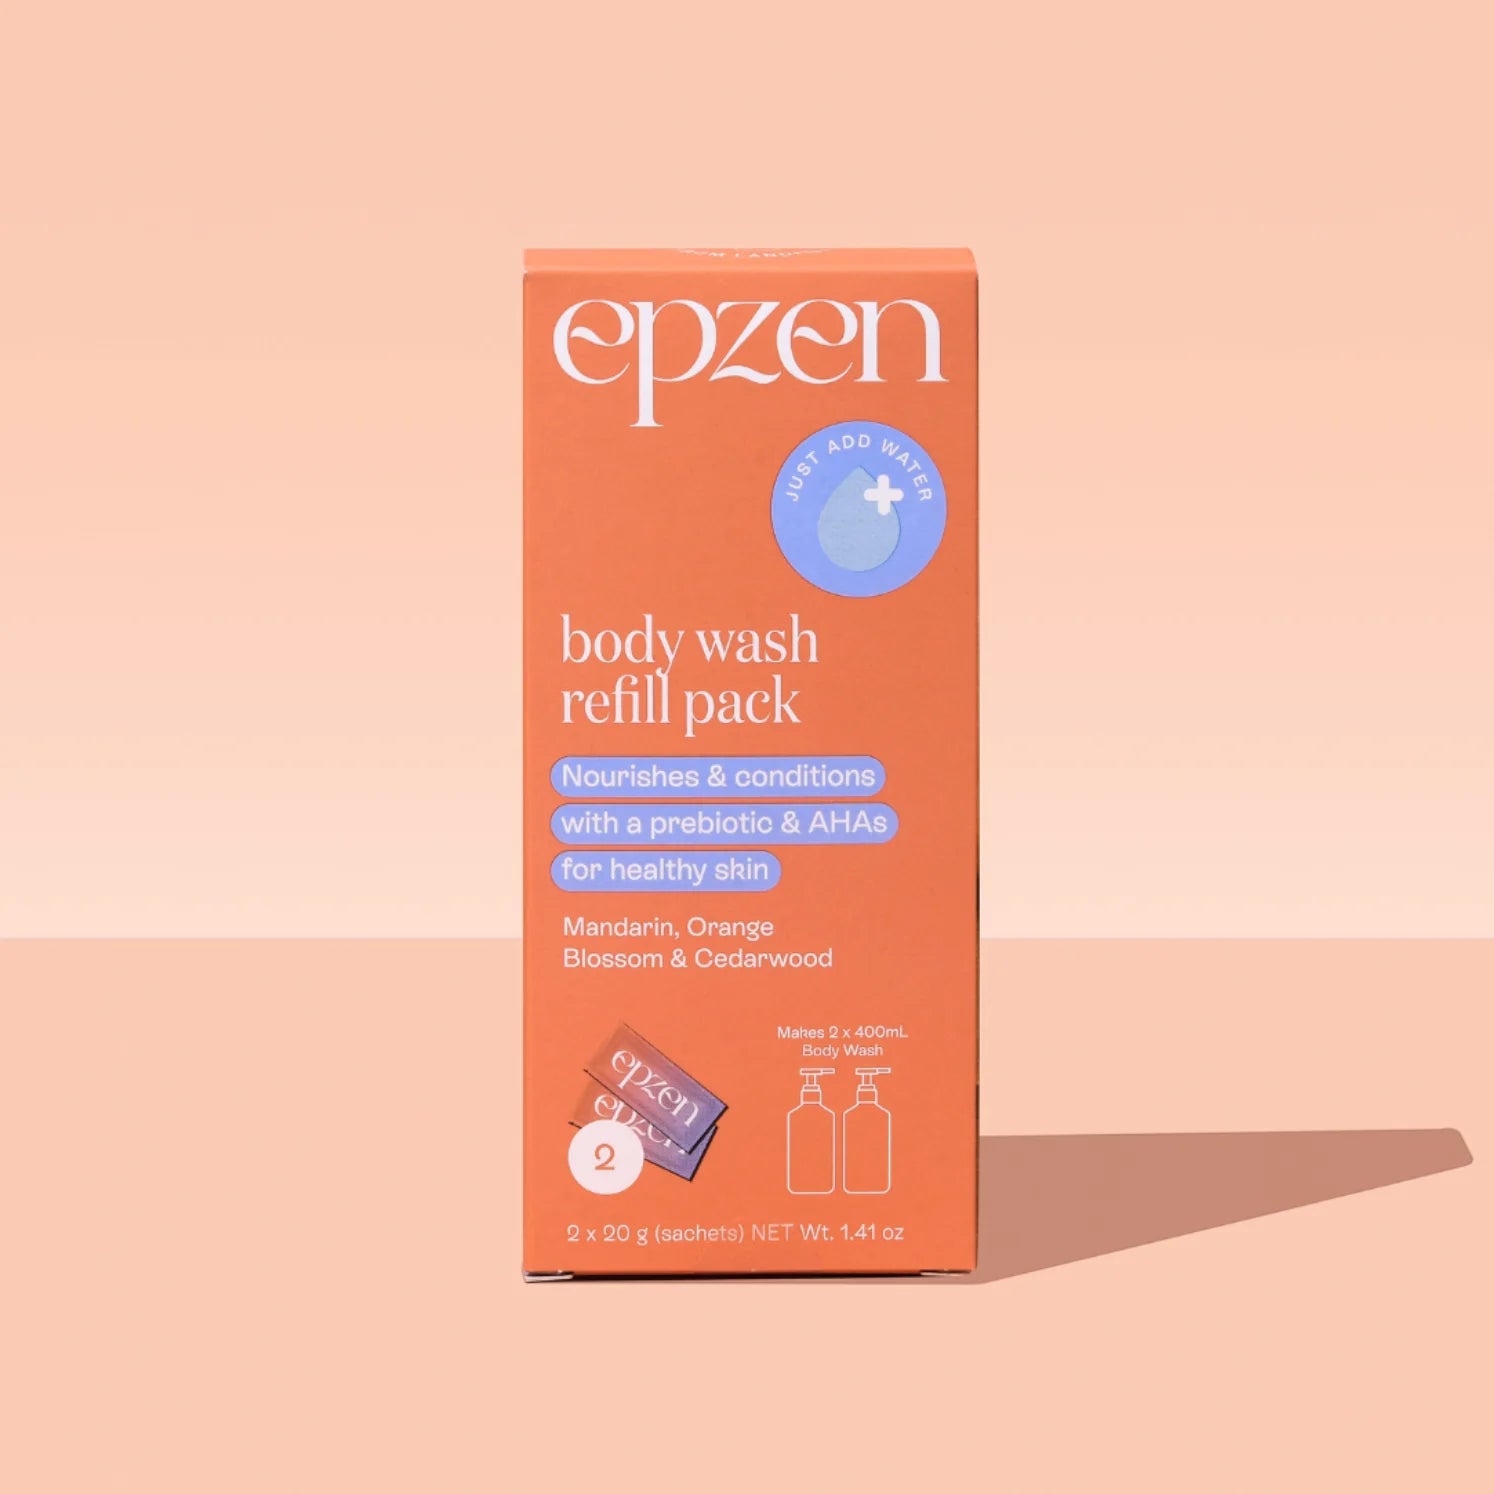 Epzen Mandarin, Orange and Cedarwood Powder-to-Gel Body Wash Refill Pack - 2 x 20g